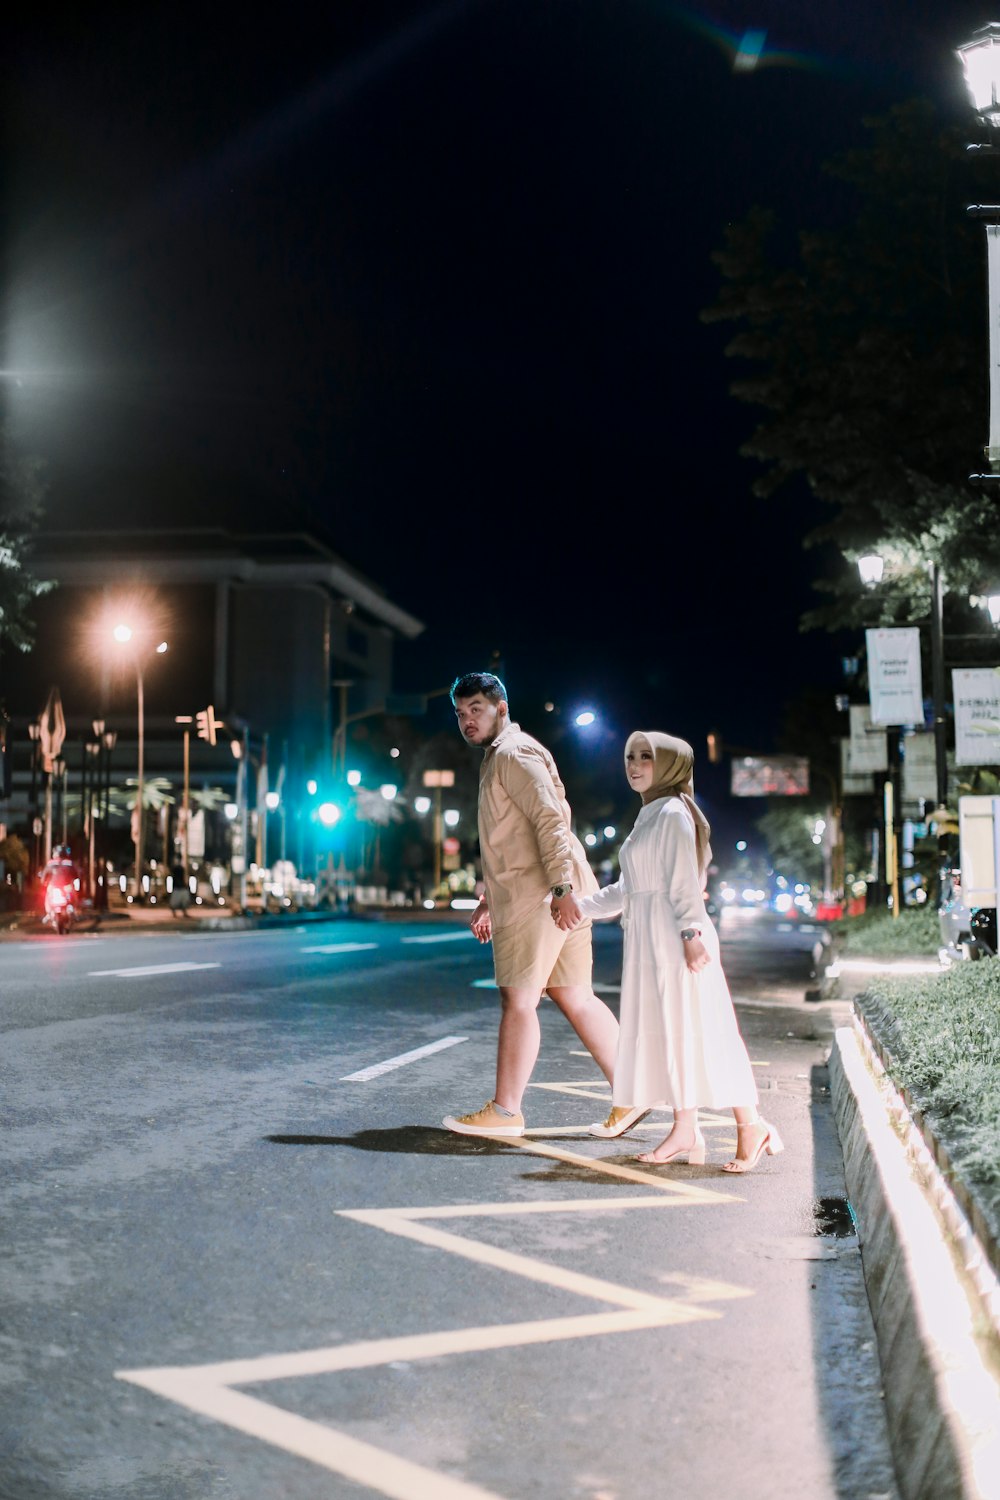 a man and woman walking down a street at night